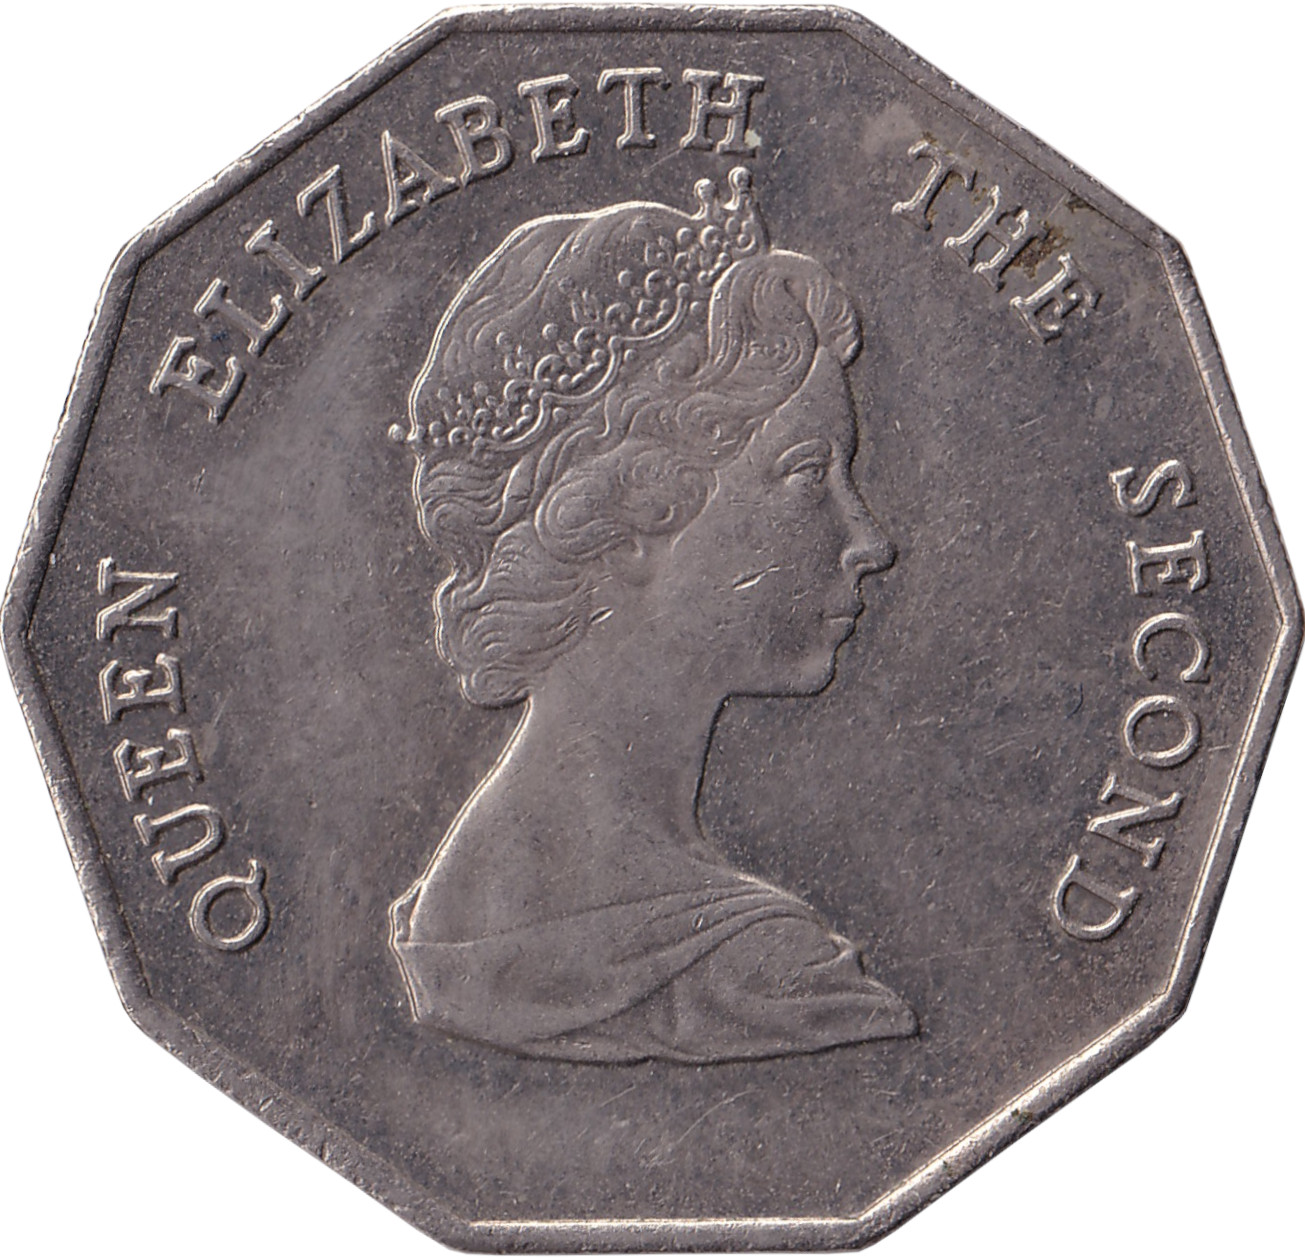 1 dollar - Elizabeth II - Buste mature - Polygonale